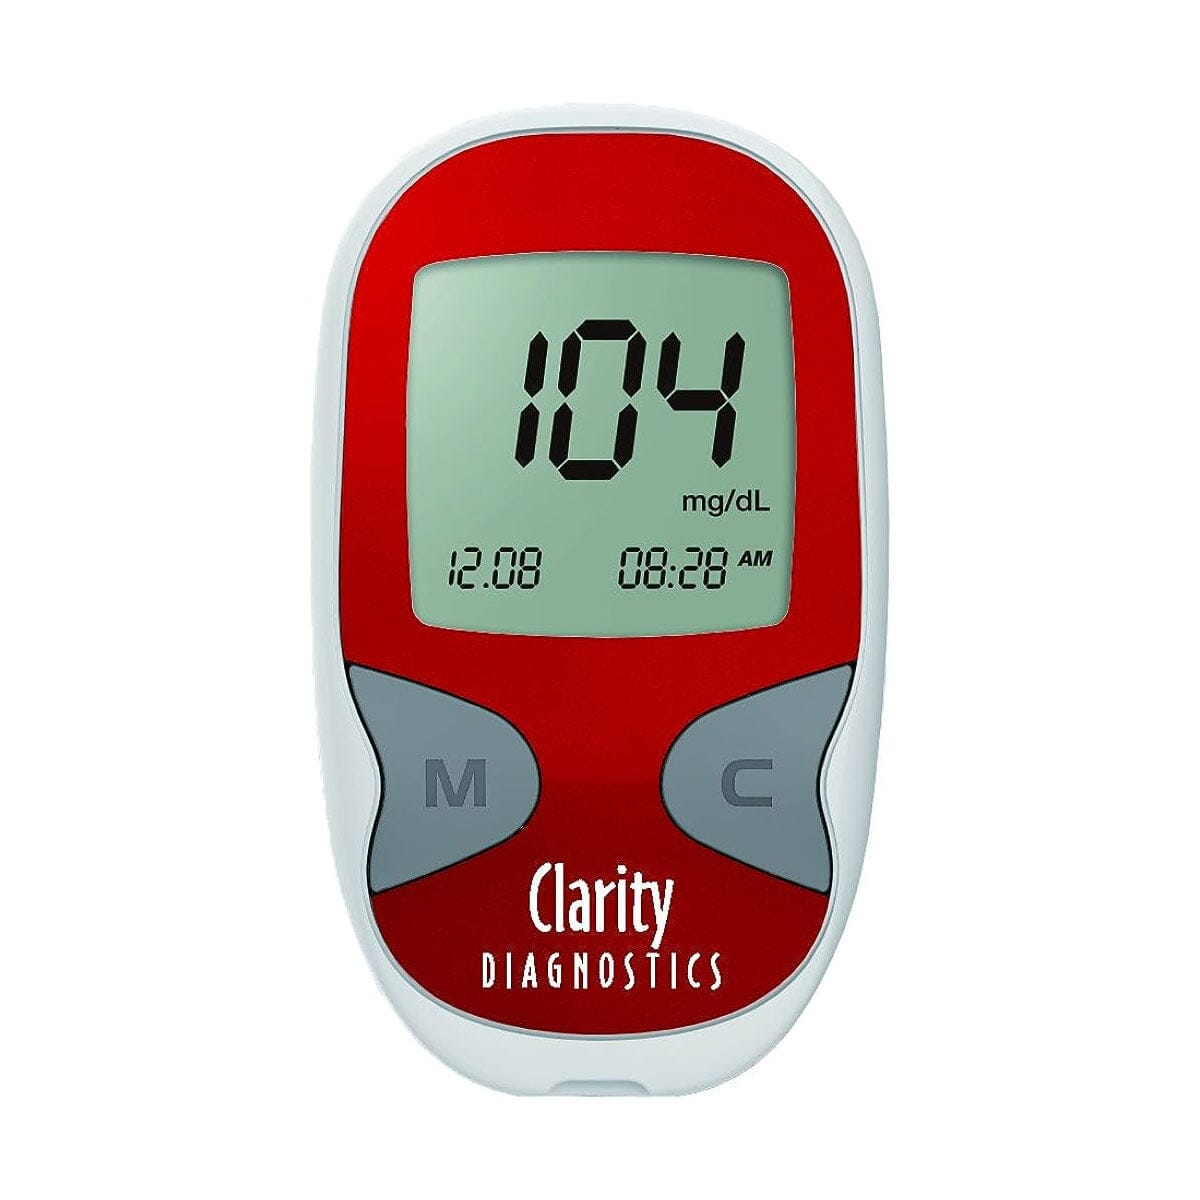 Clarity BG1000 Blood Glucose Monitoring System